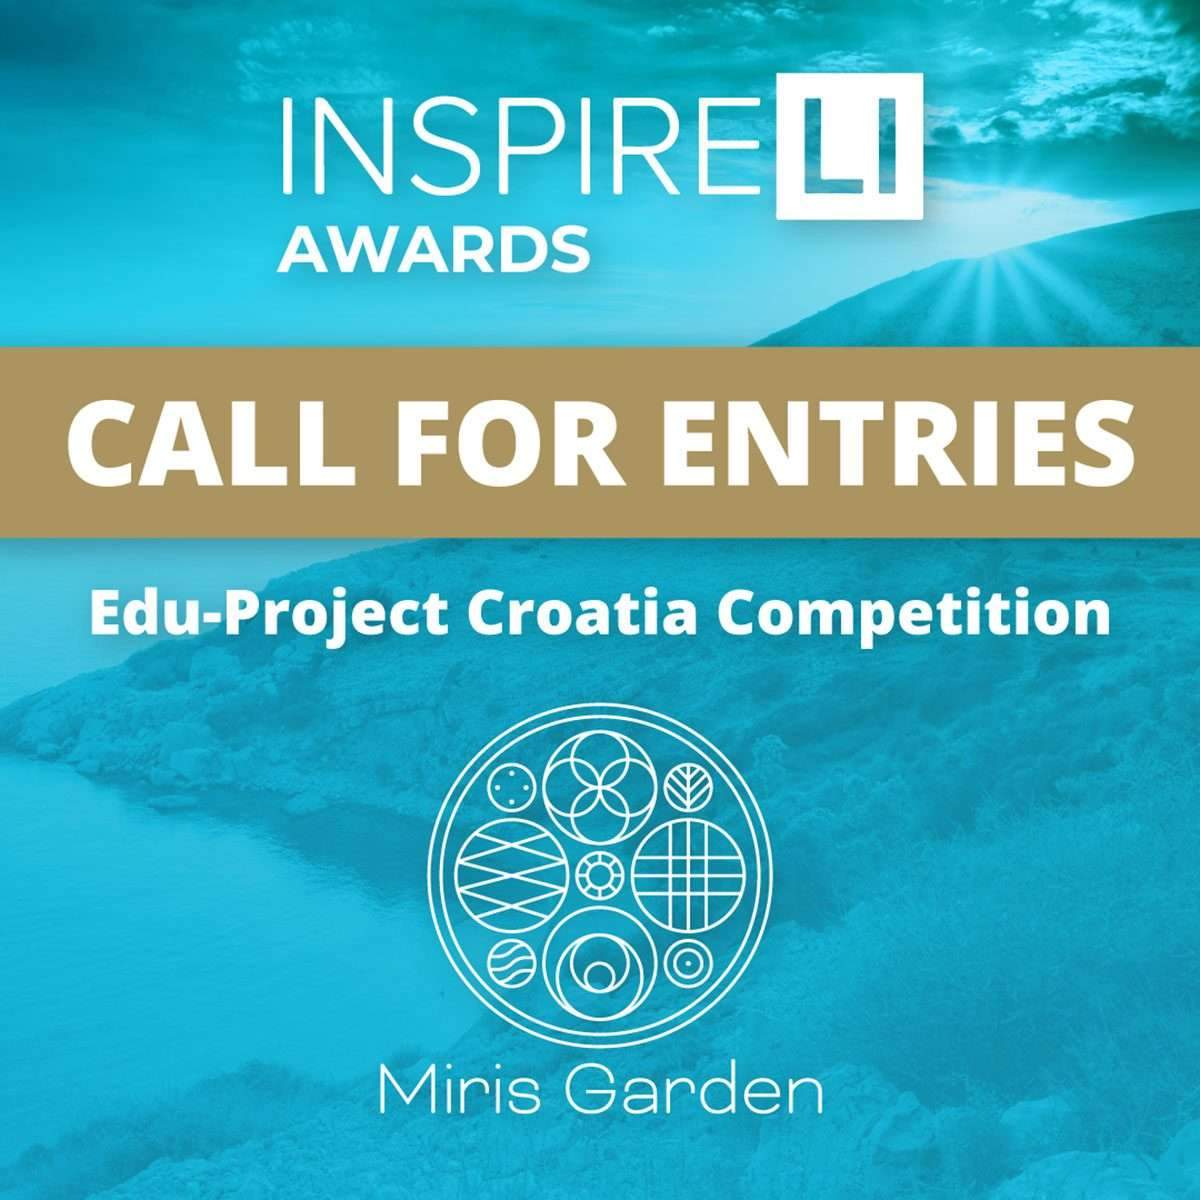 Croatia Inspireli Competition for students is open مسابقة كرواتيا إنسبيريلي للطلاب مفتوحة